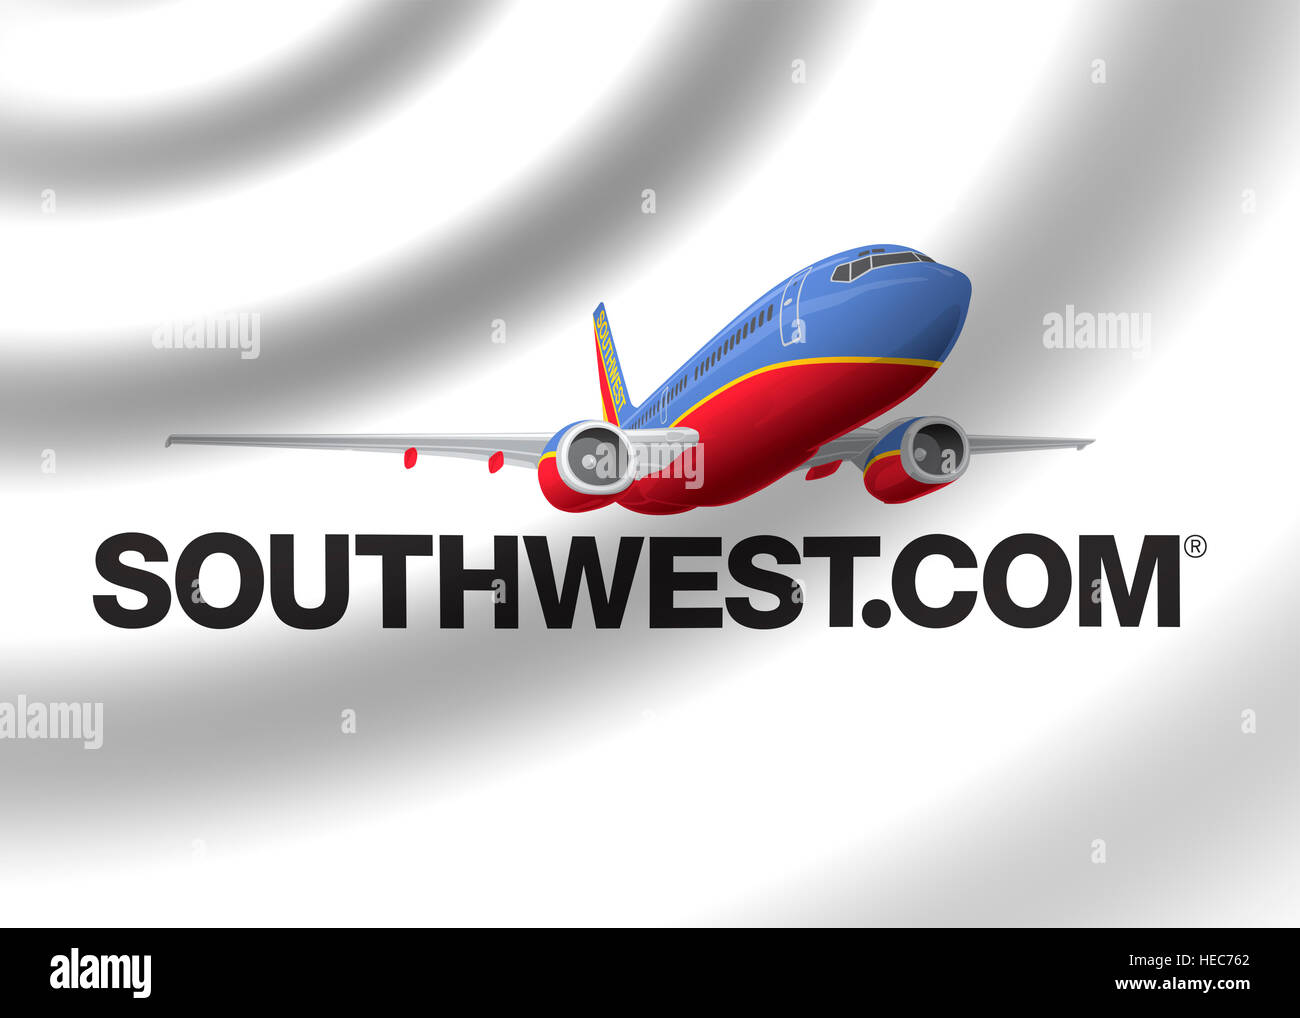 Southwest Airlines Air logo icon flag emblem Stock Photo